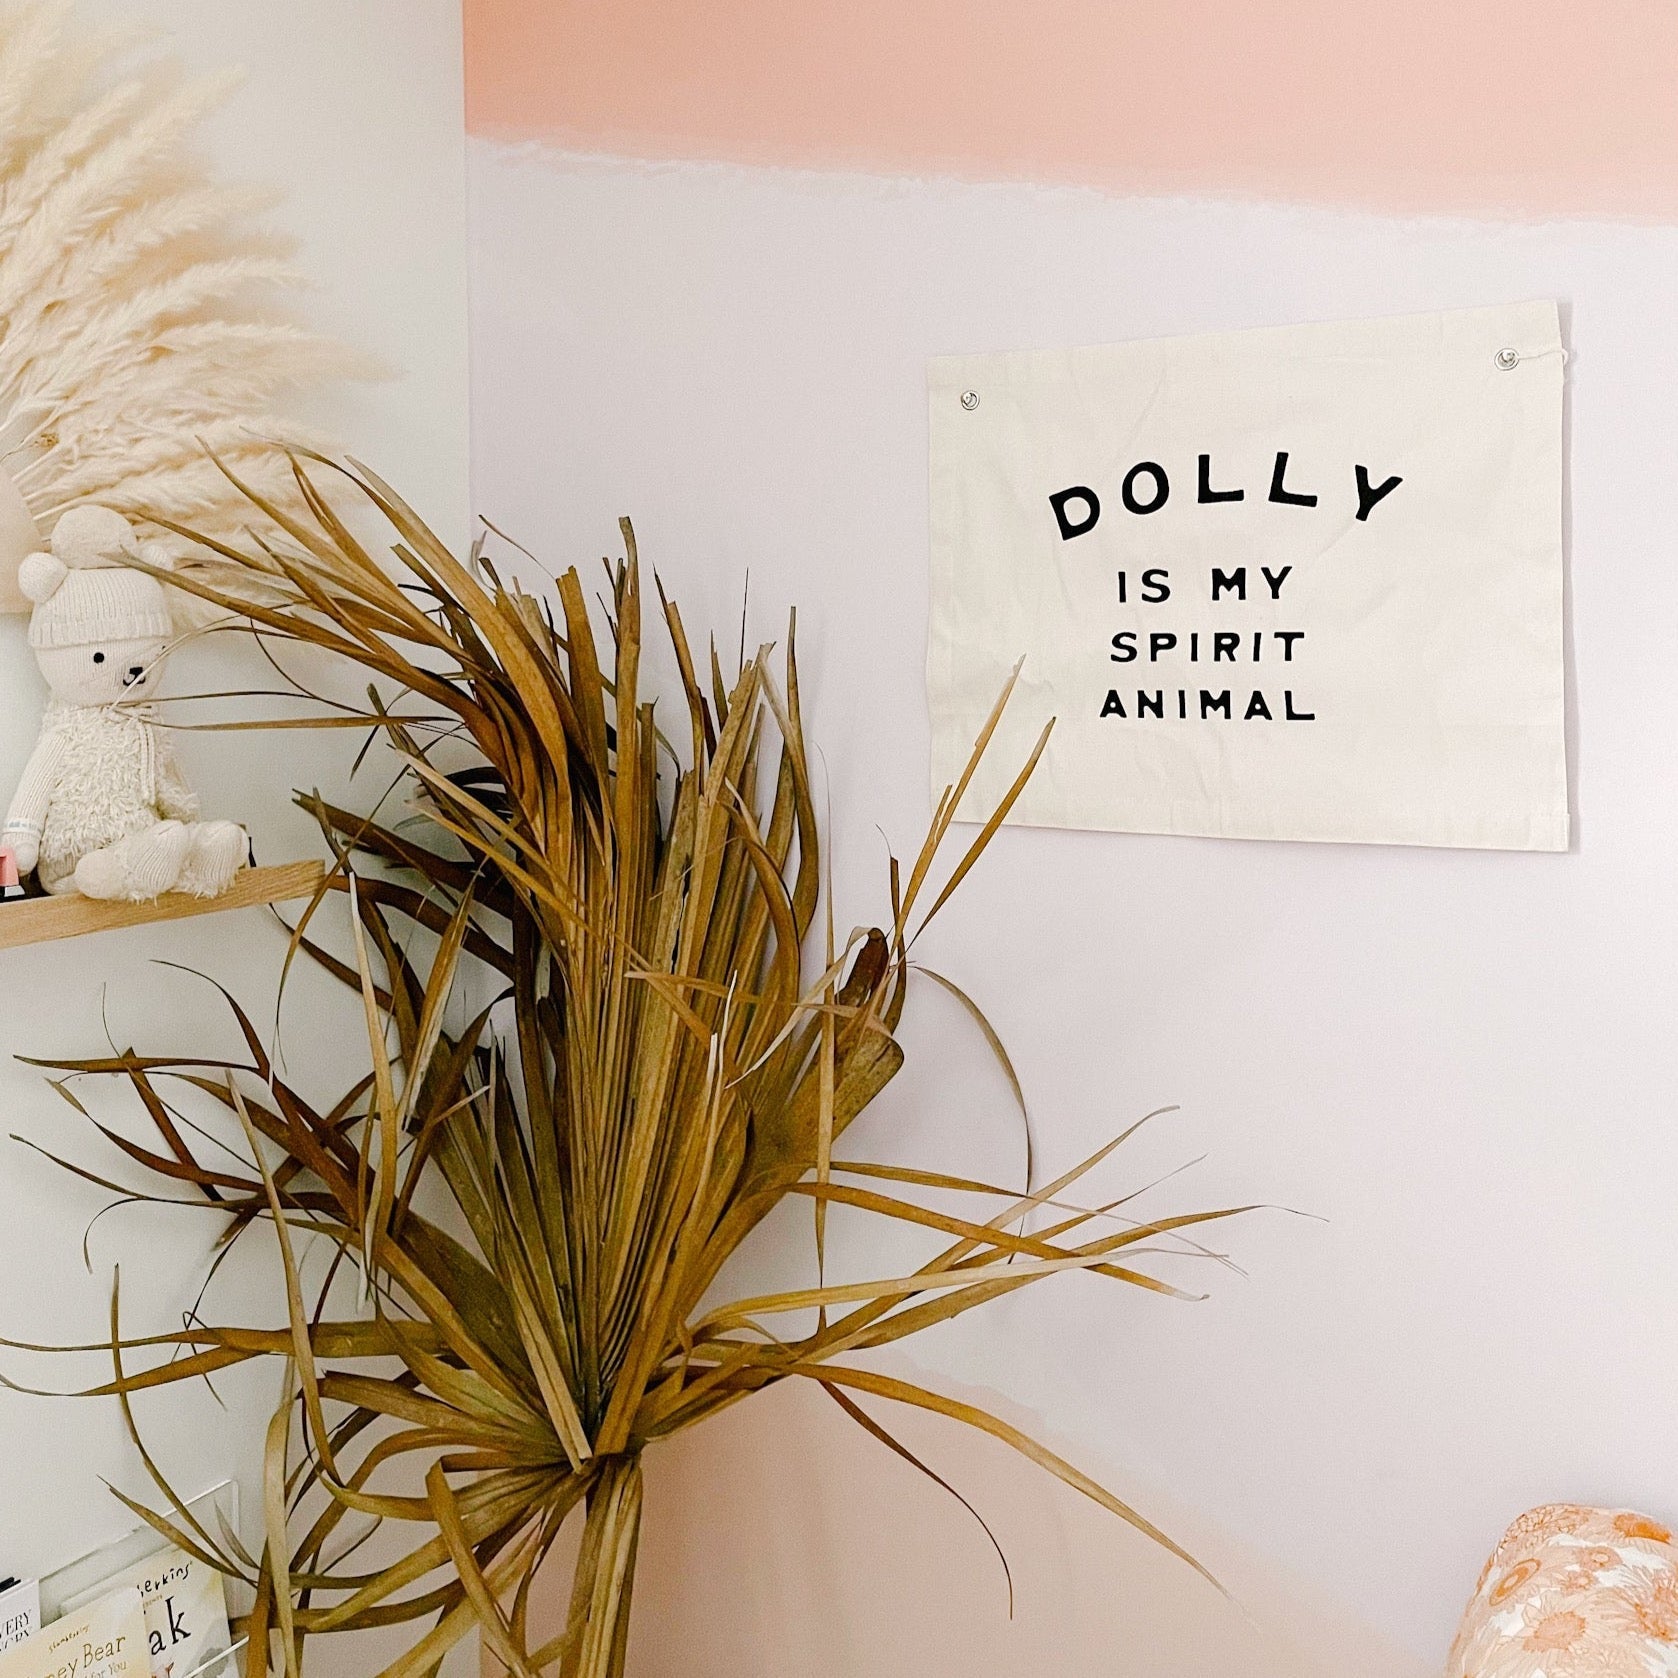 dolly is my spirit animal banner